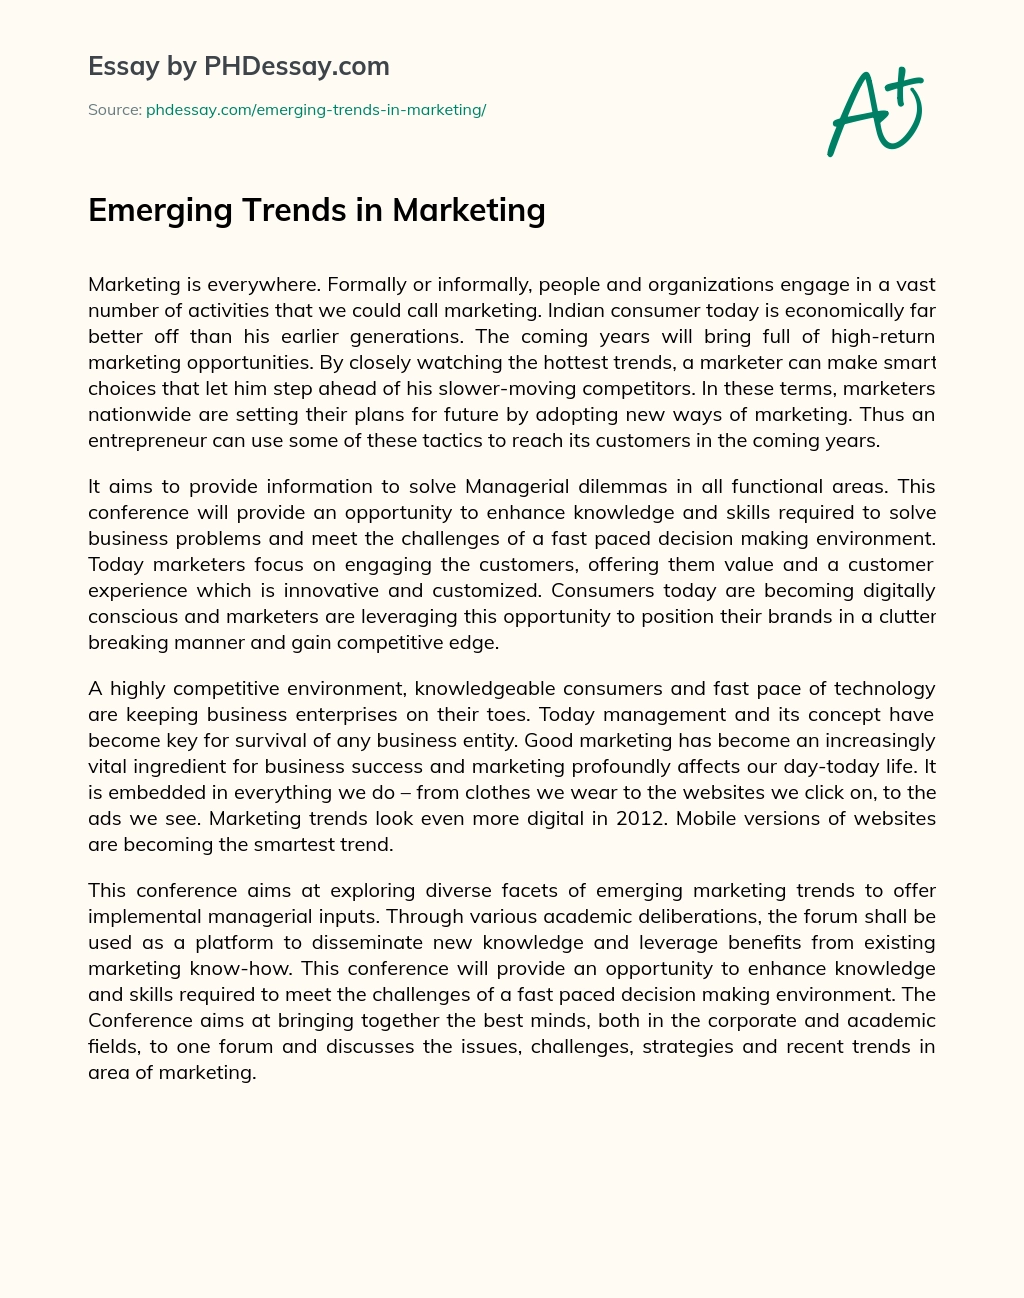 Emerging Trends in Marketing essay